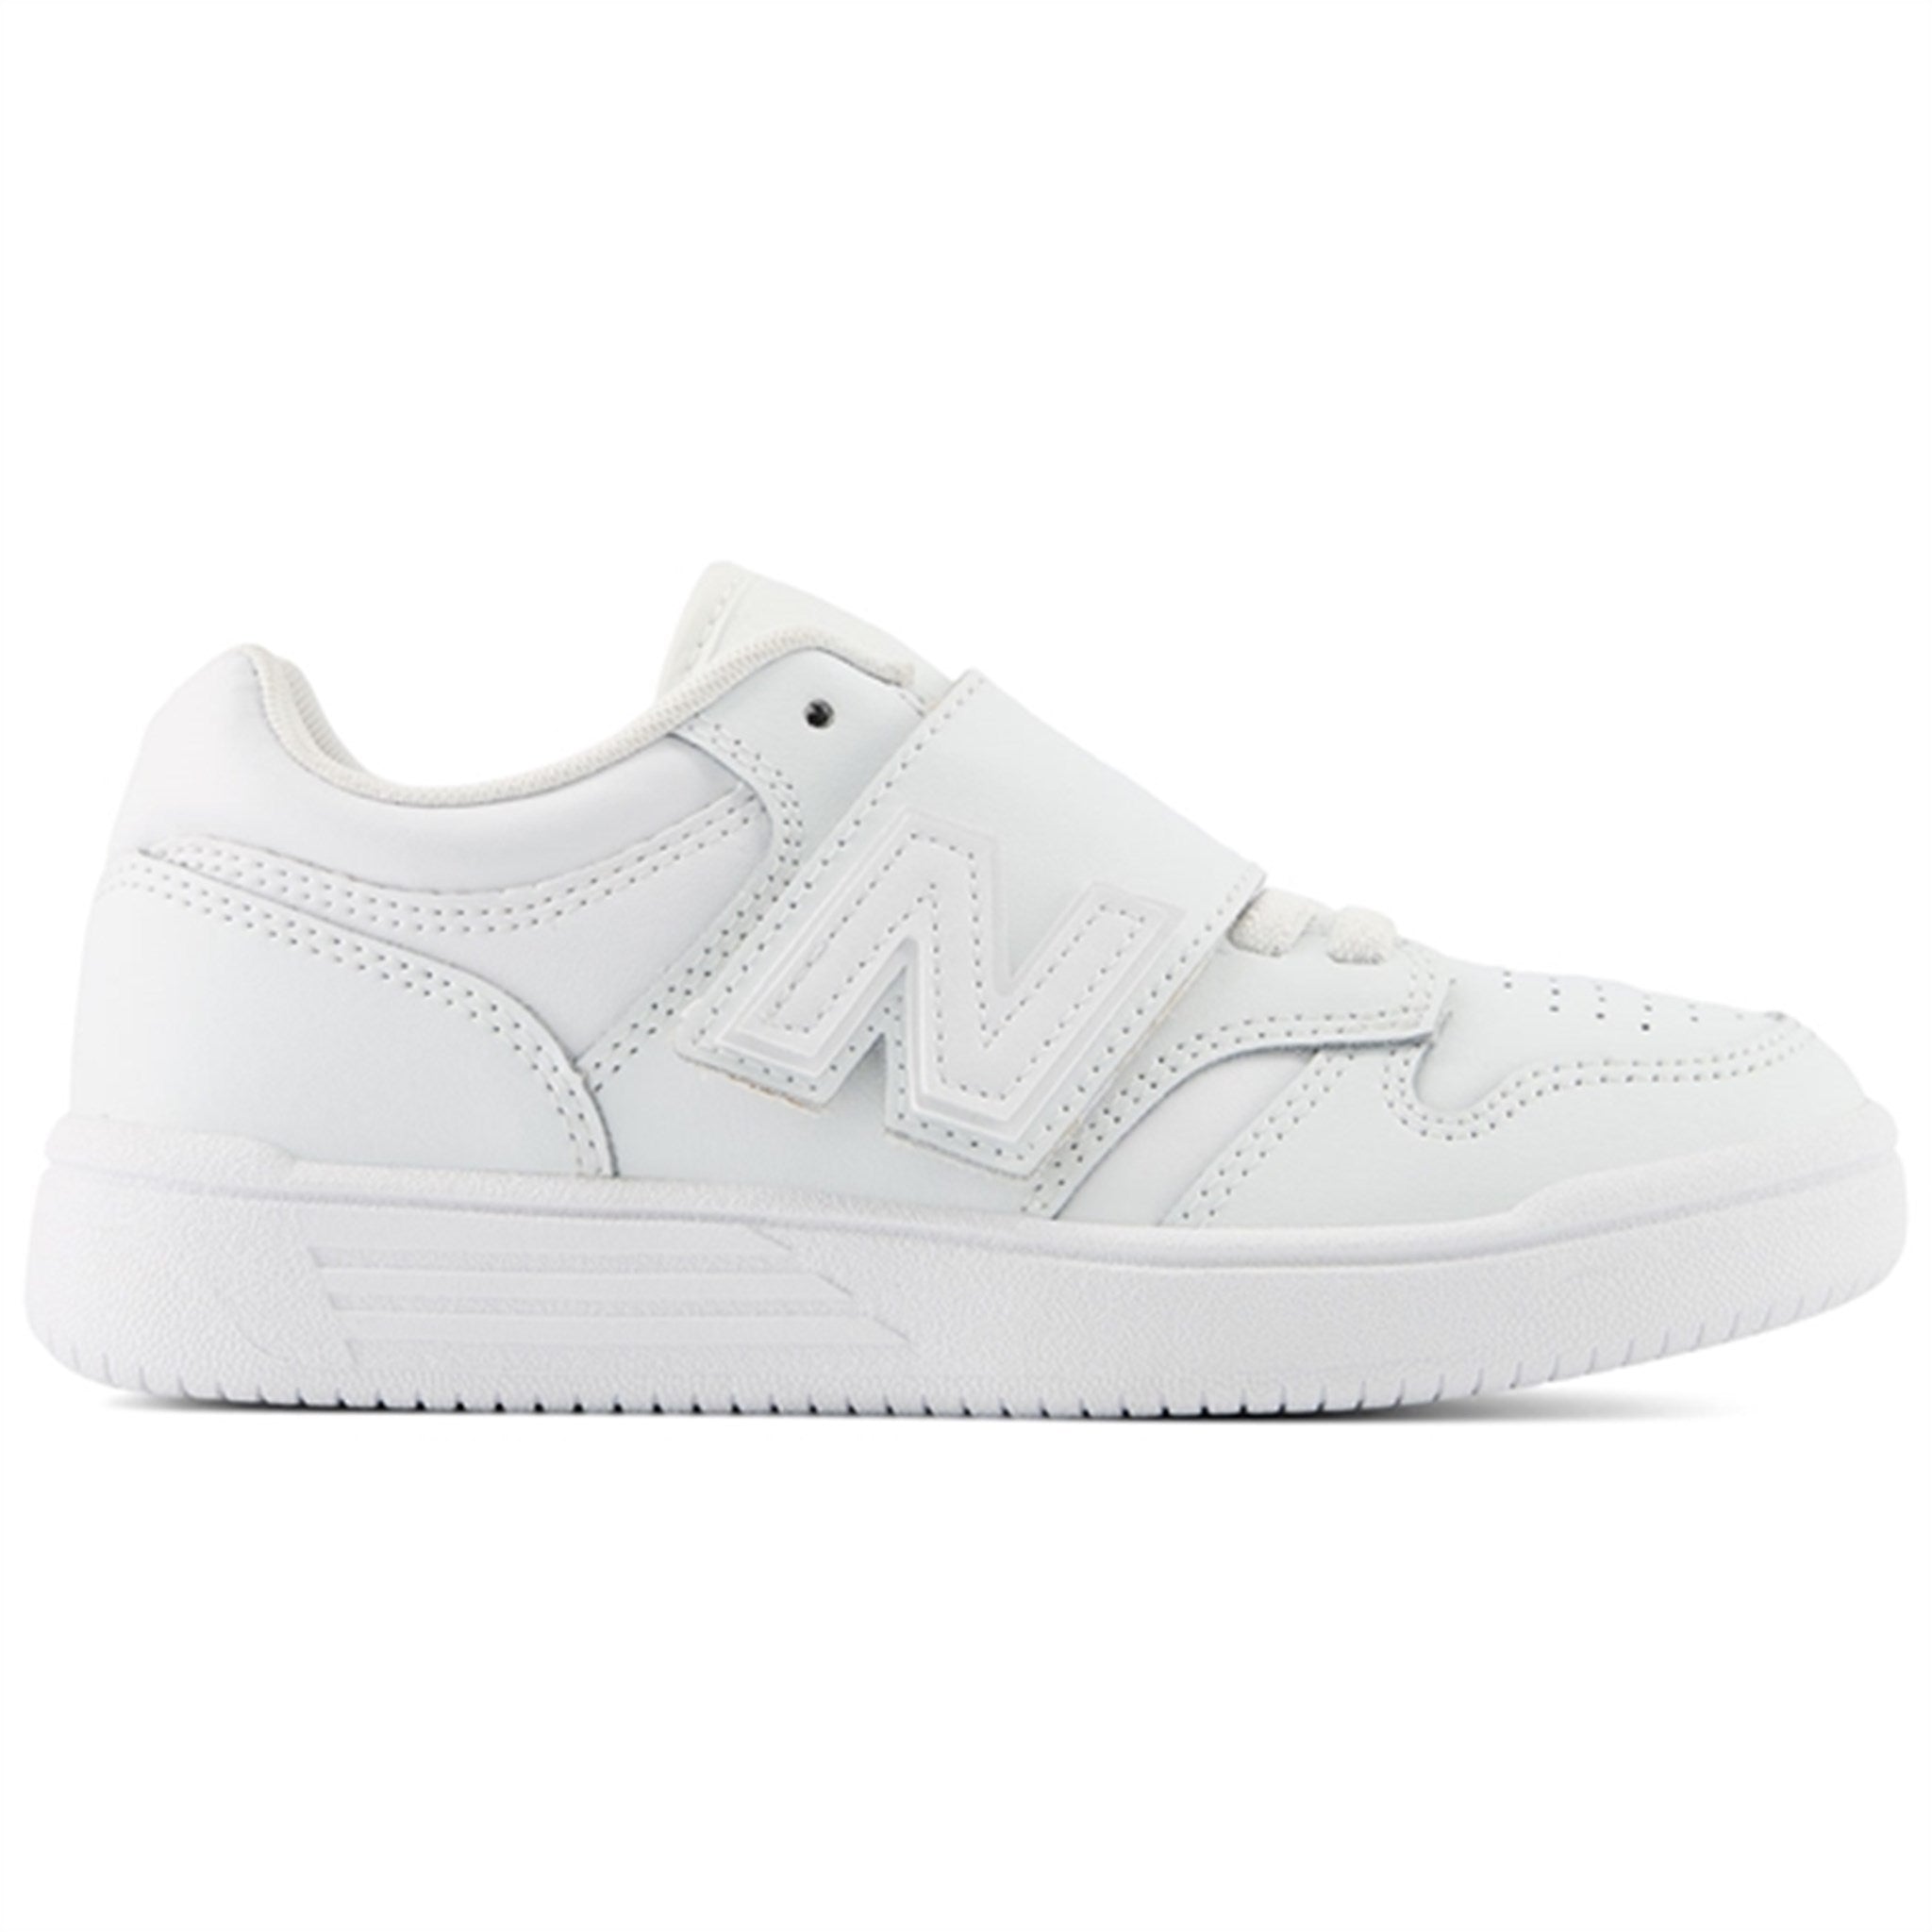 New Balance BB480 Sneakers Kids White